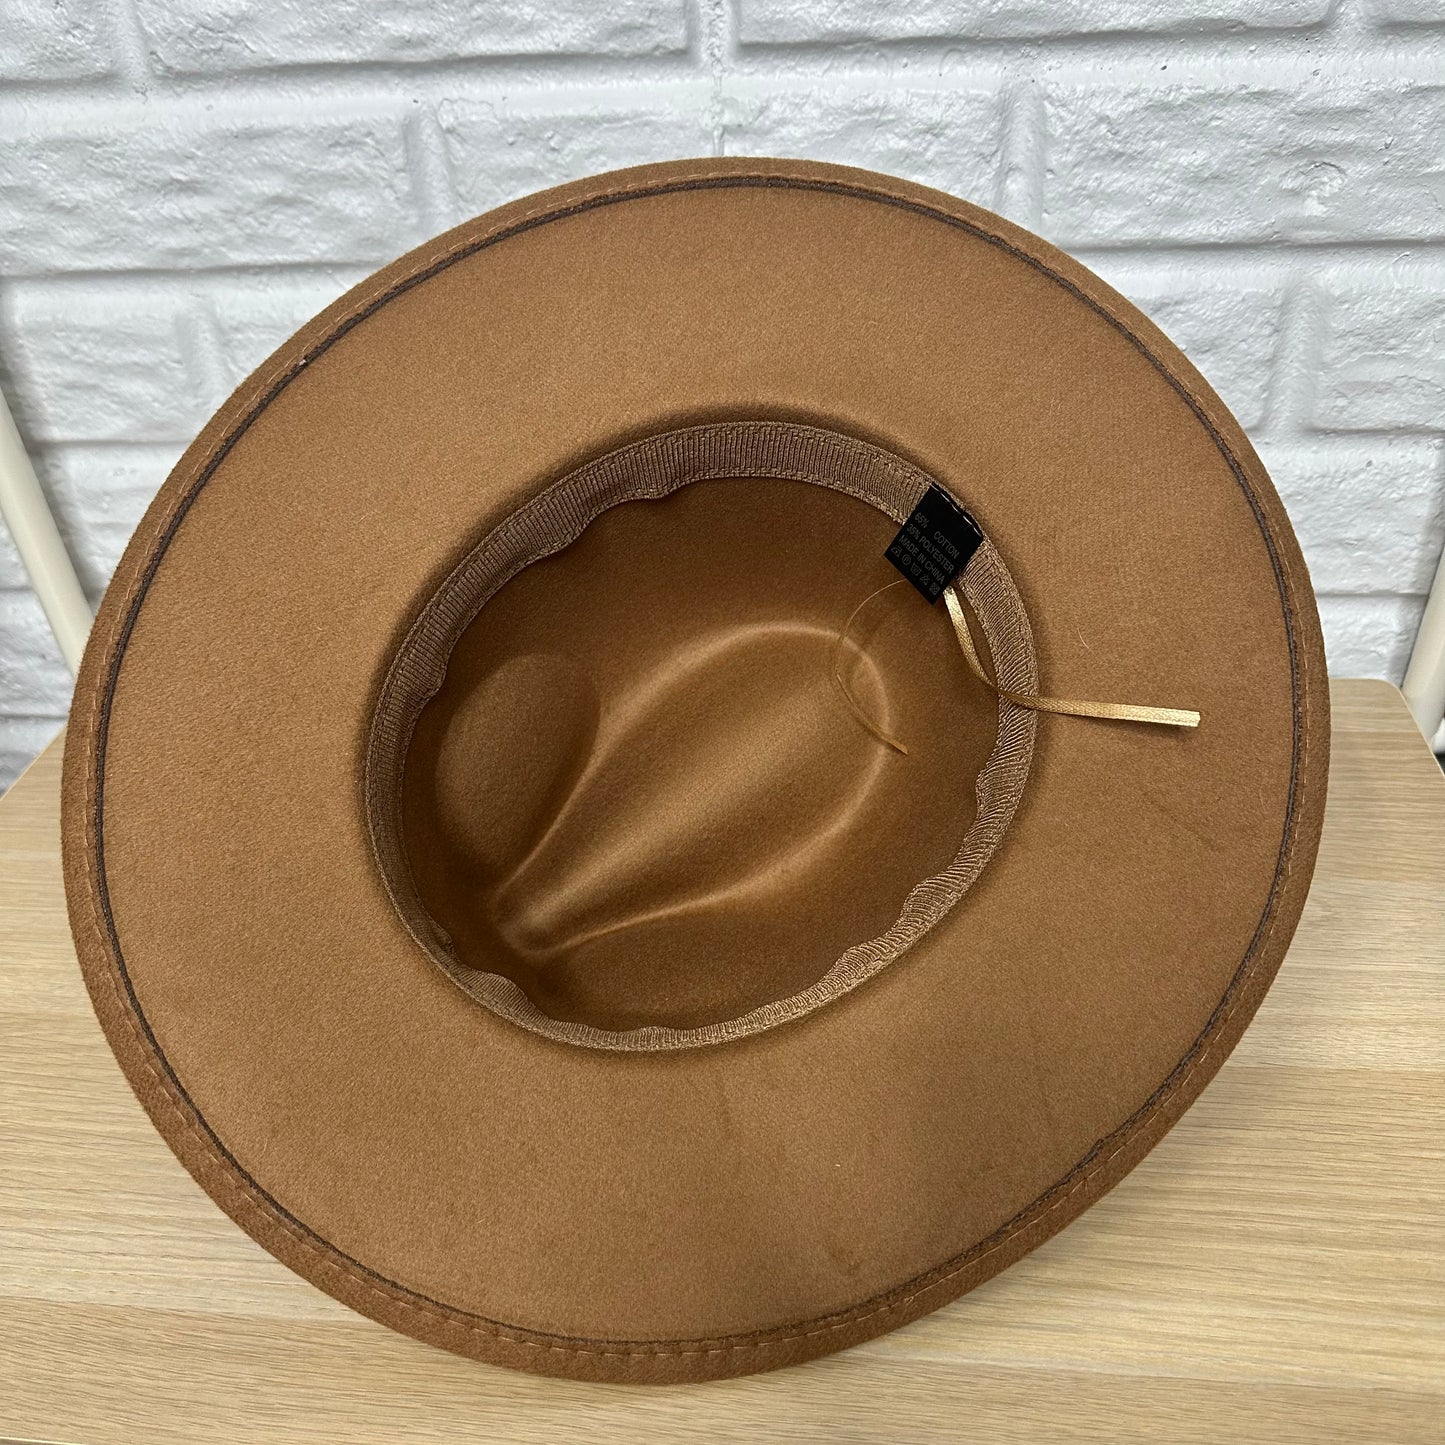 Khaki Brown Wide Brim Fedora Hat